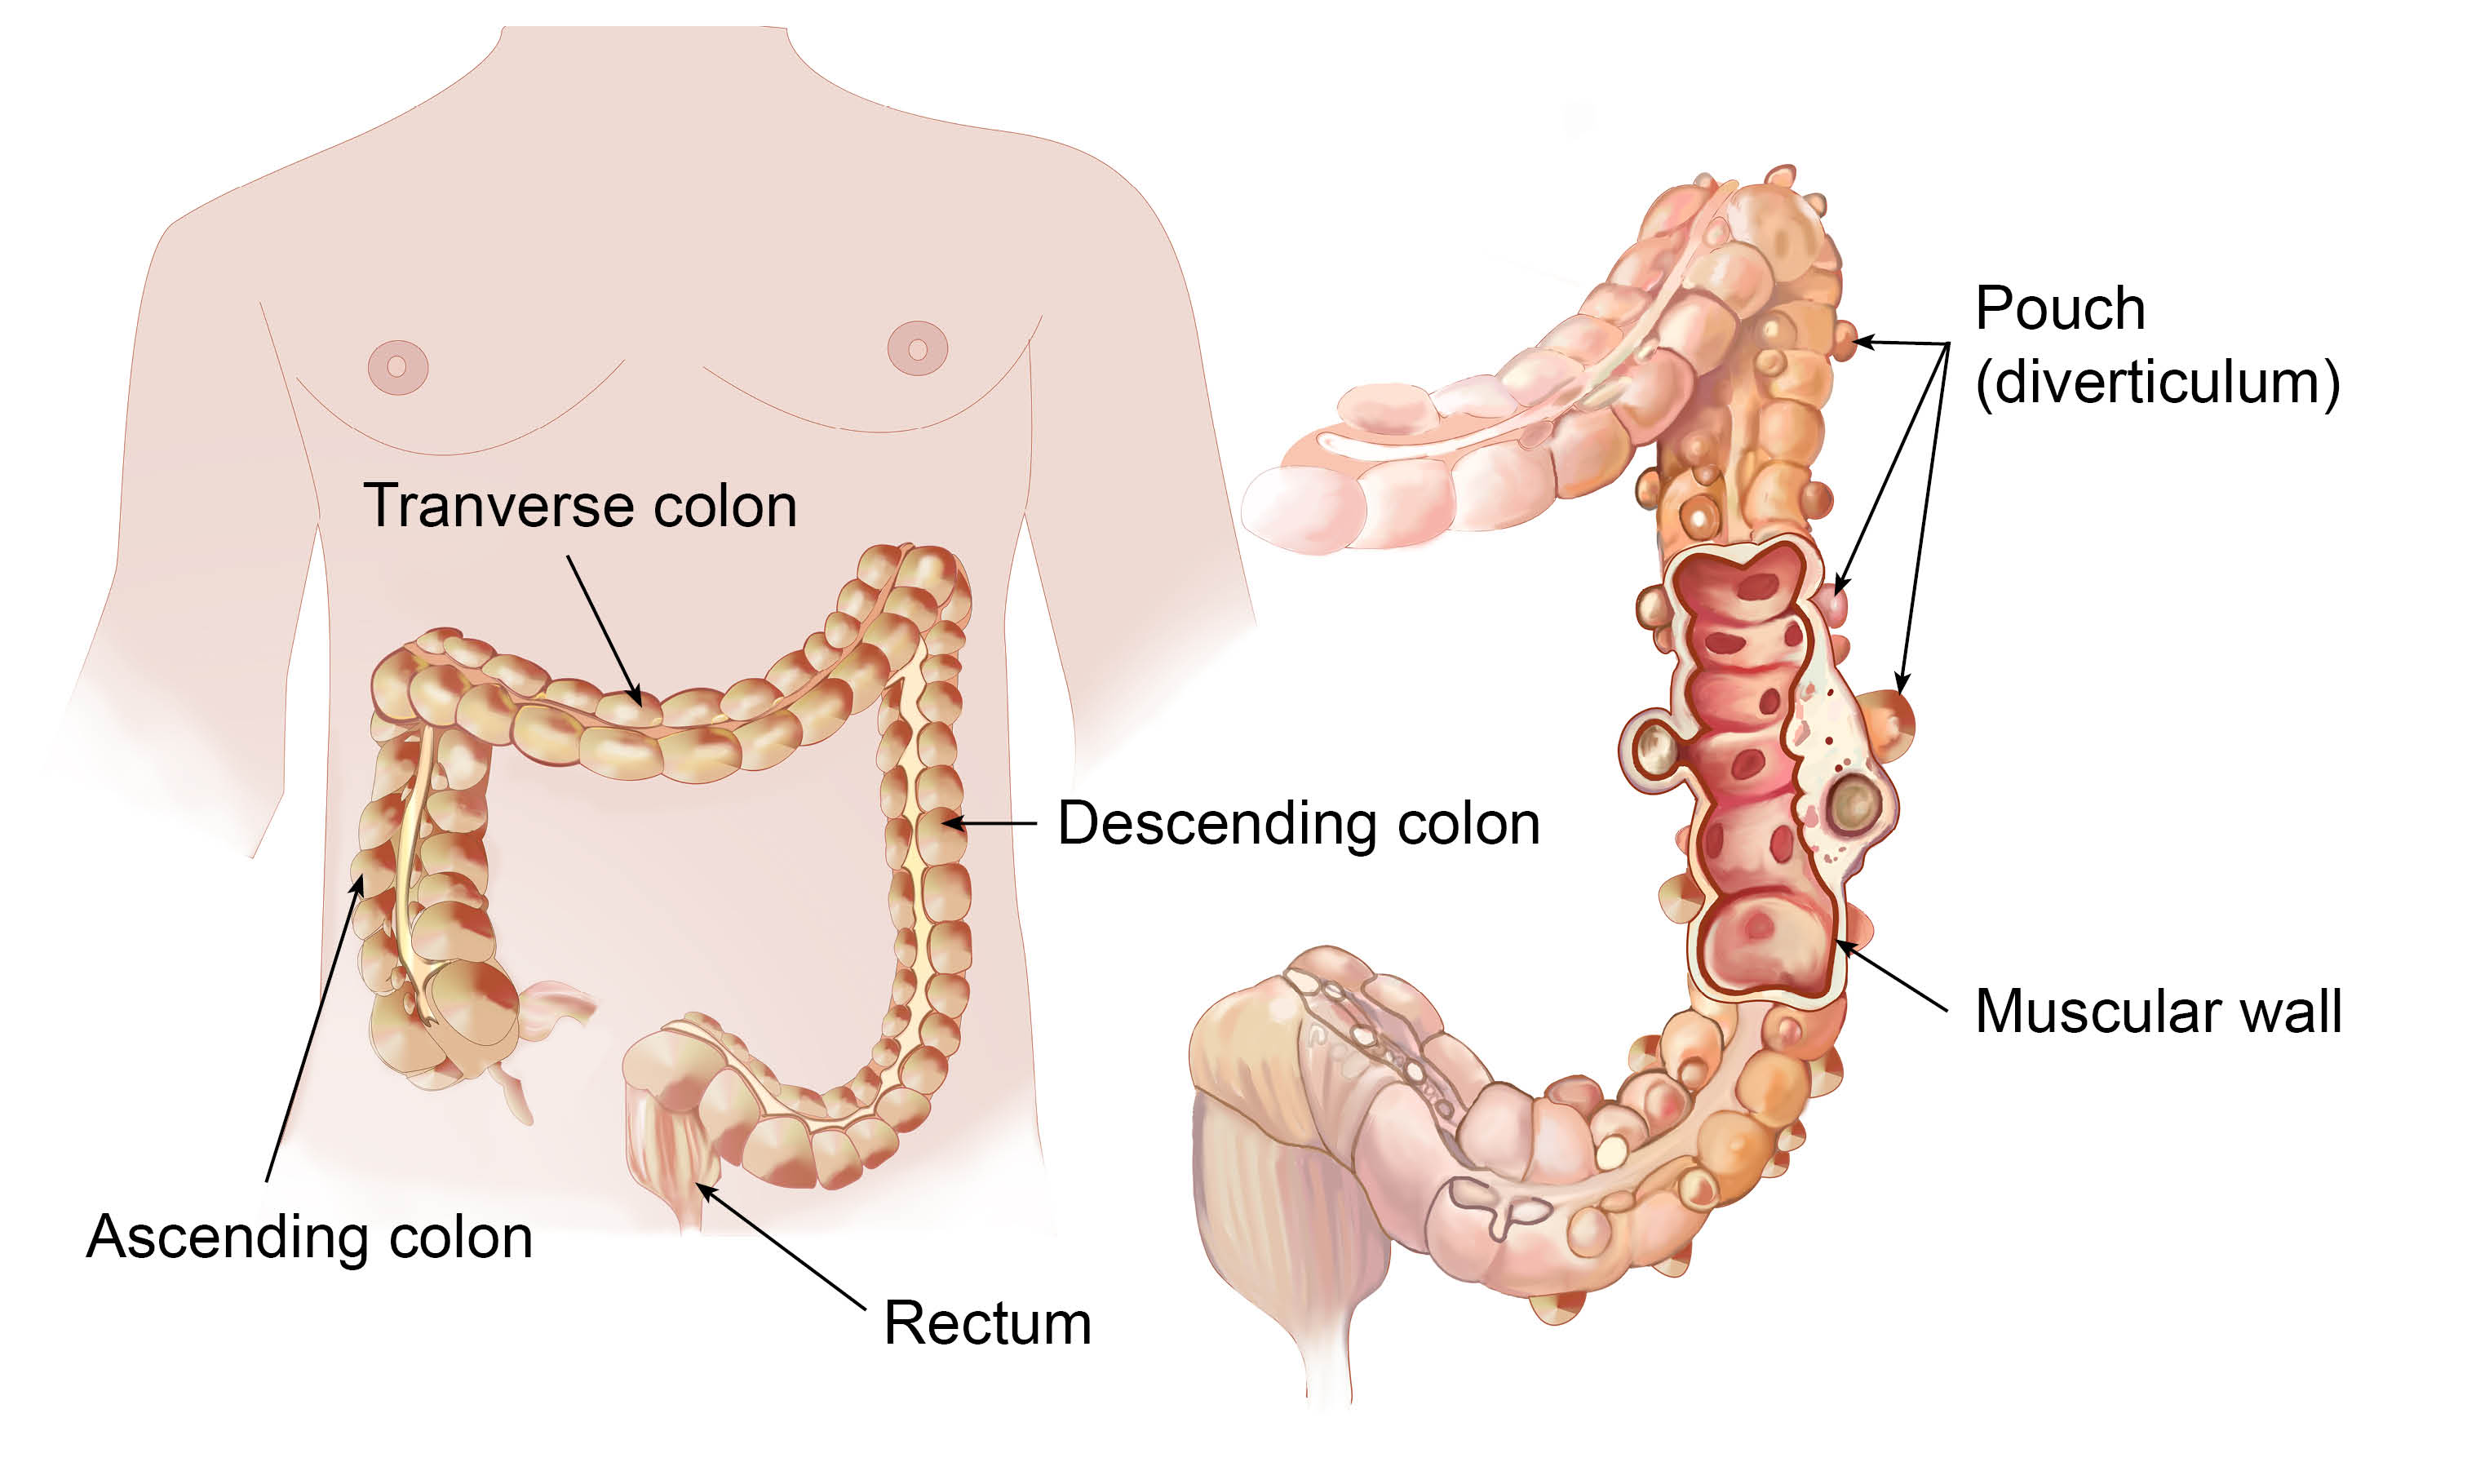 Pouches (diverticulum) in the colon